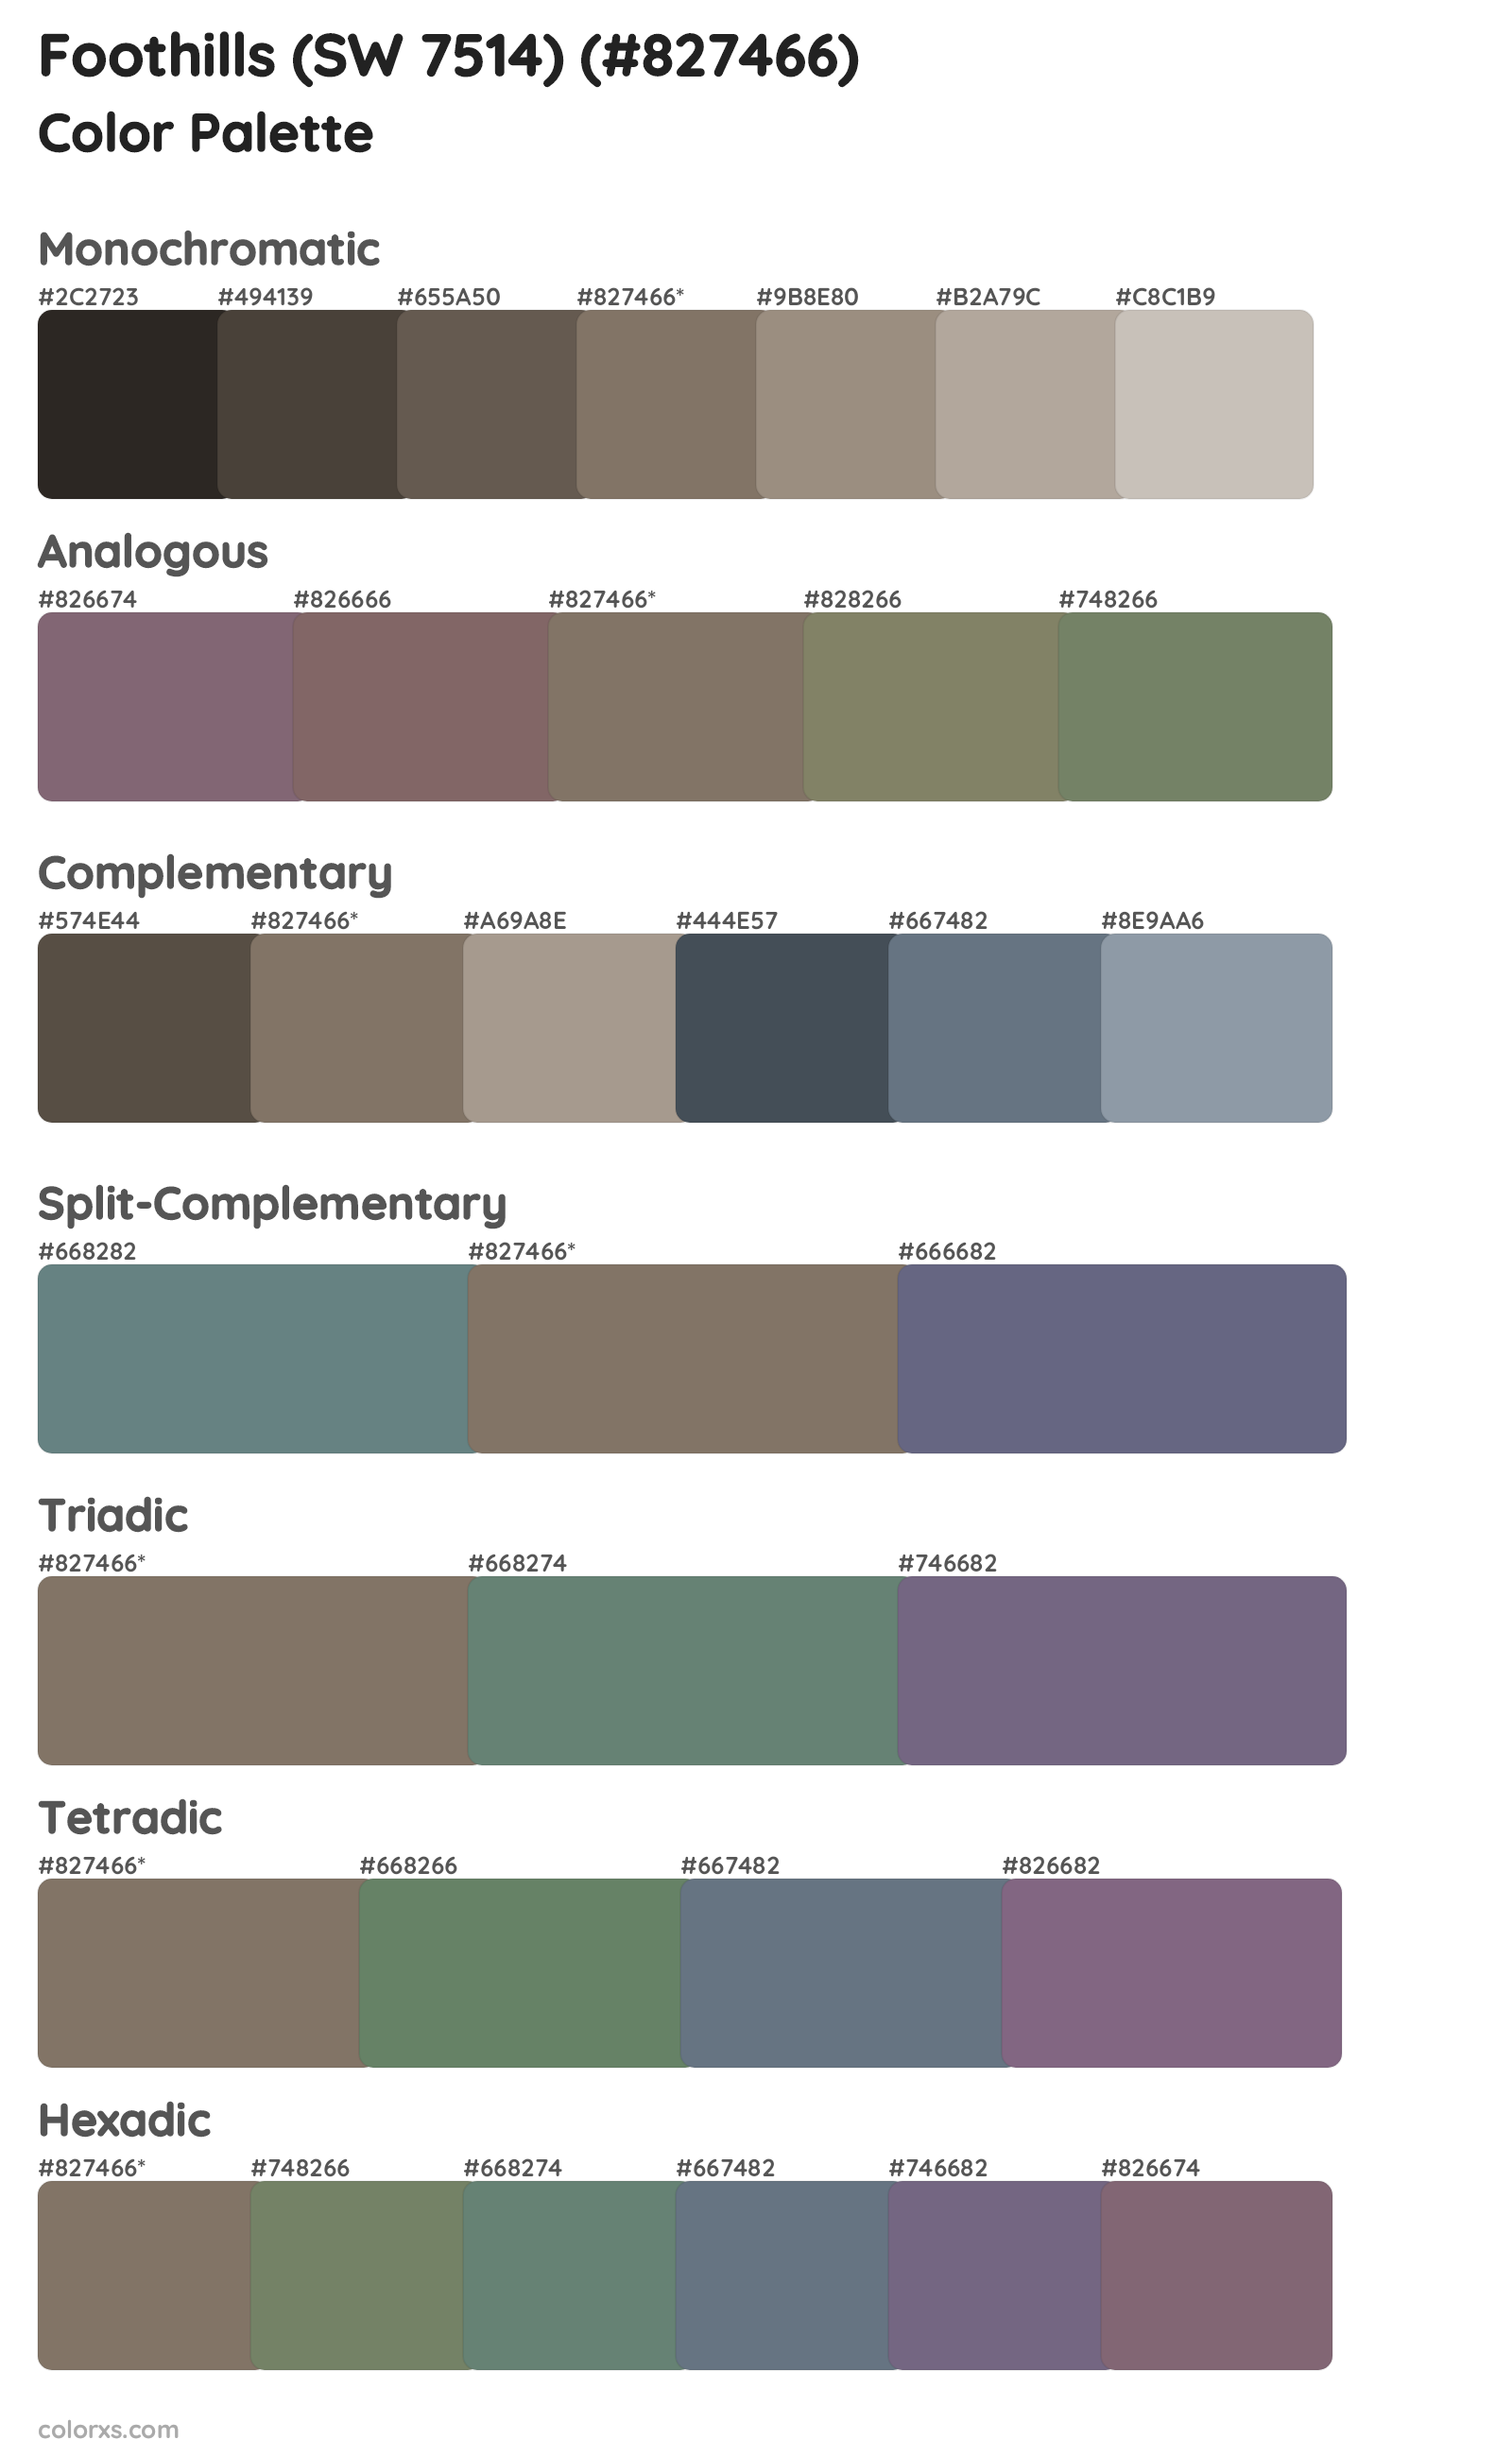 Foothills (SW 7514) Color Scheme Palettes